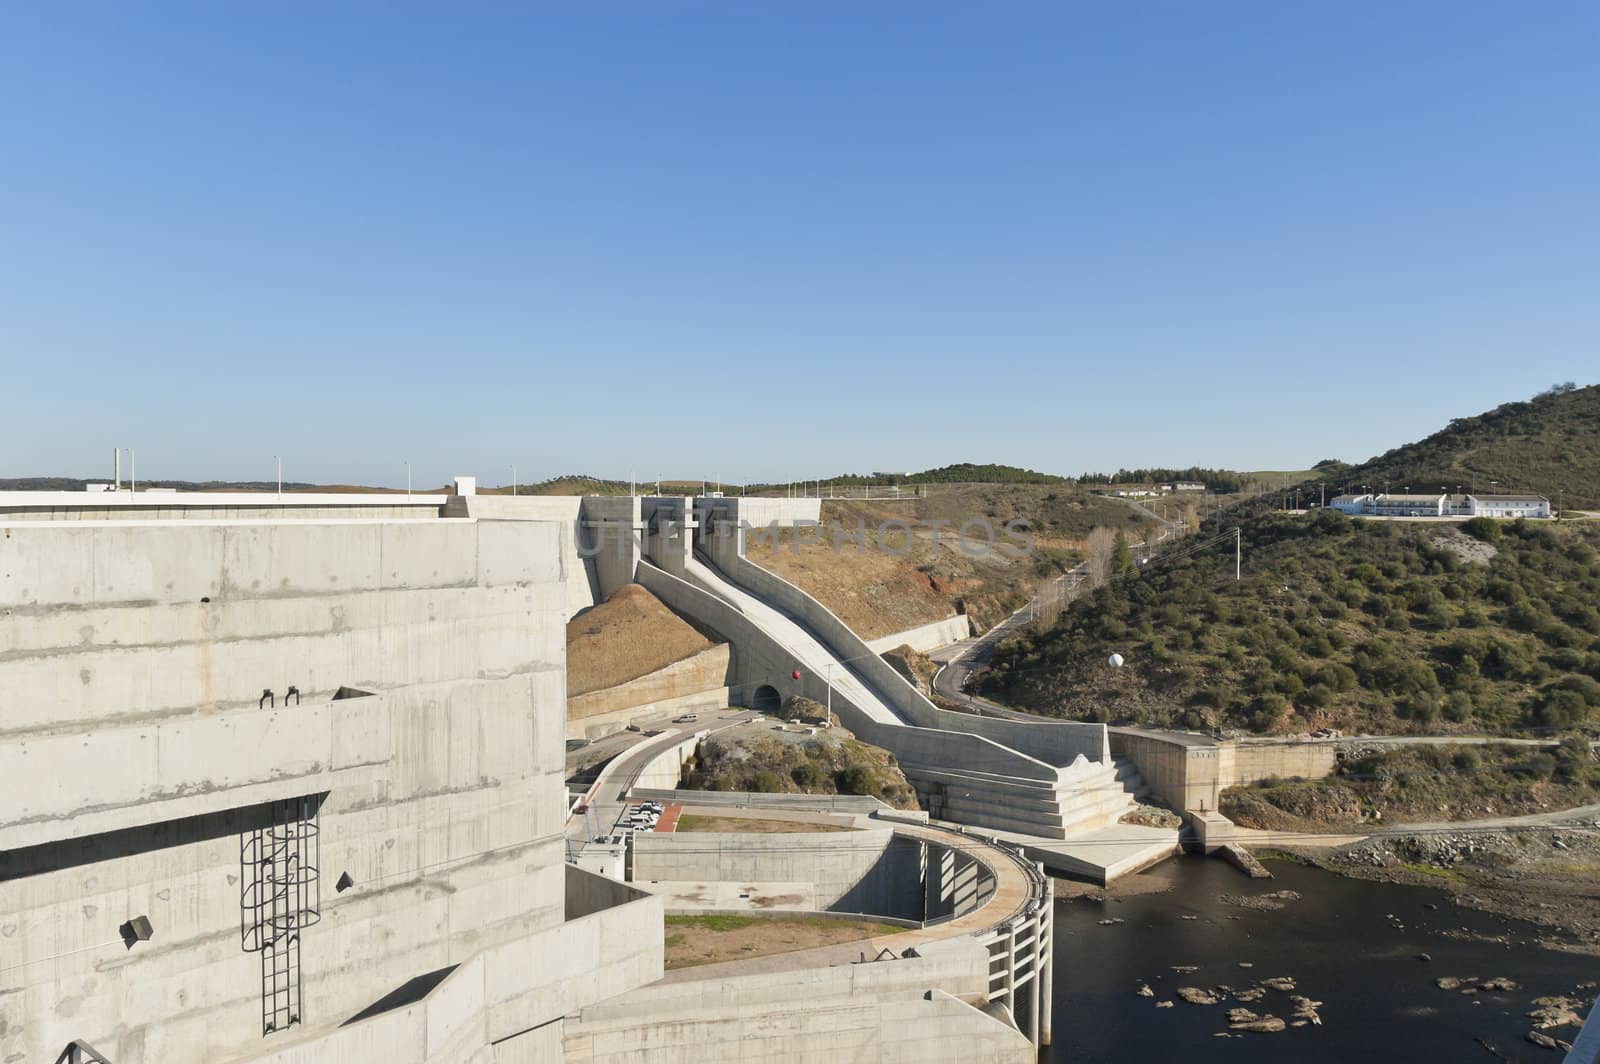 Overview of the downstream side of Alqueva dam in Guadiana river, Alentejo, Portugal